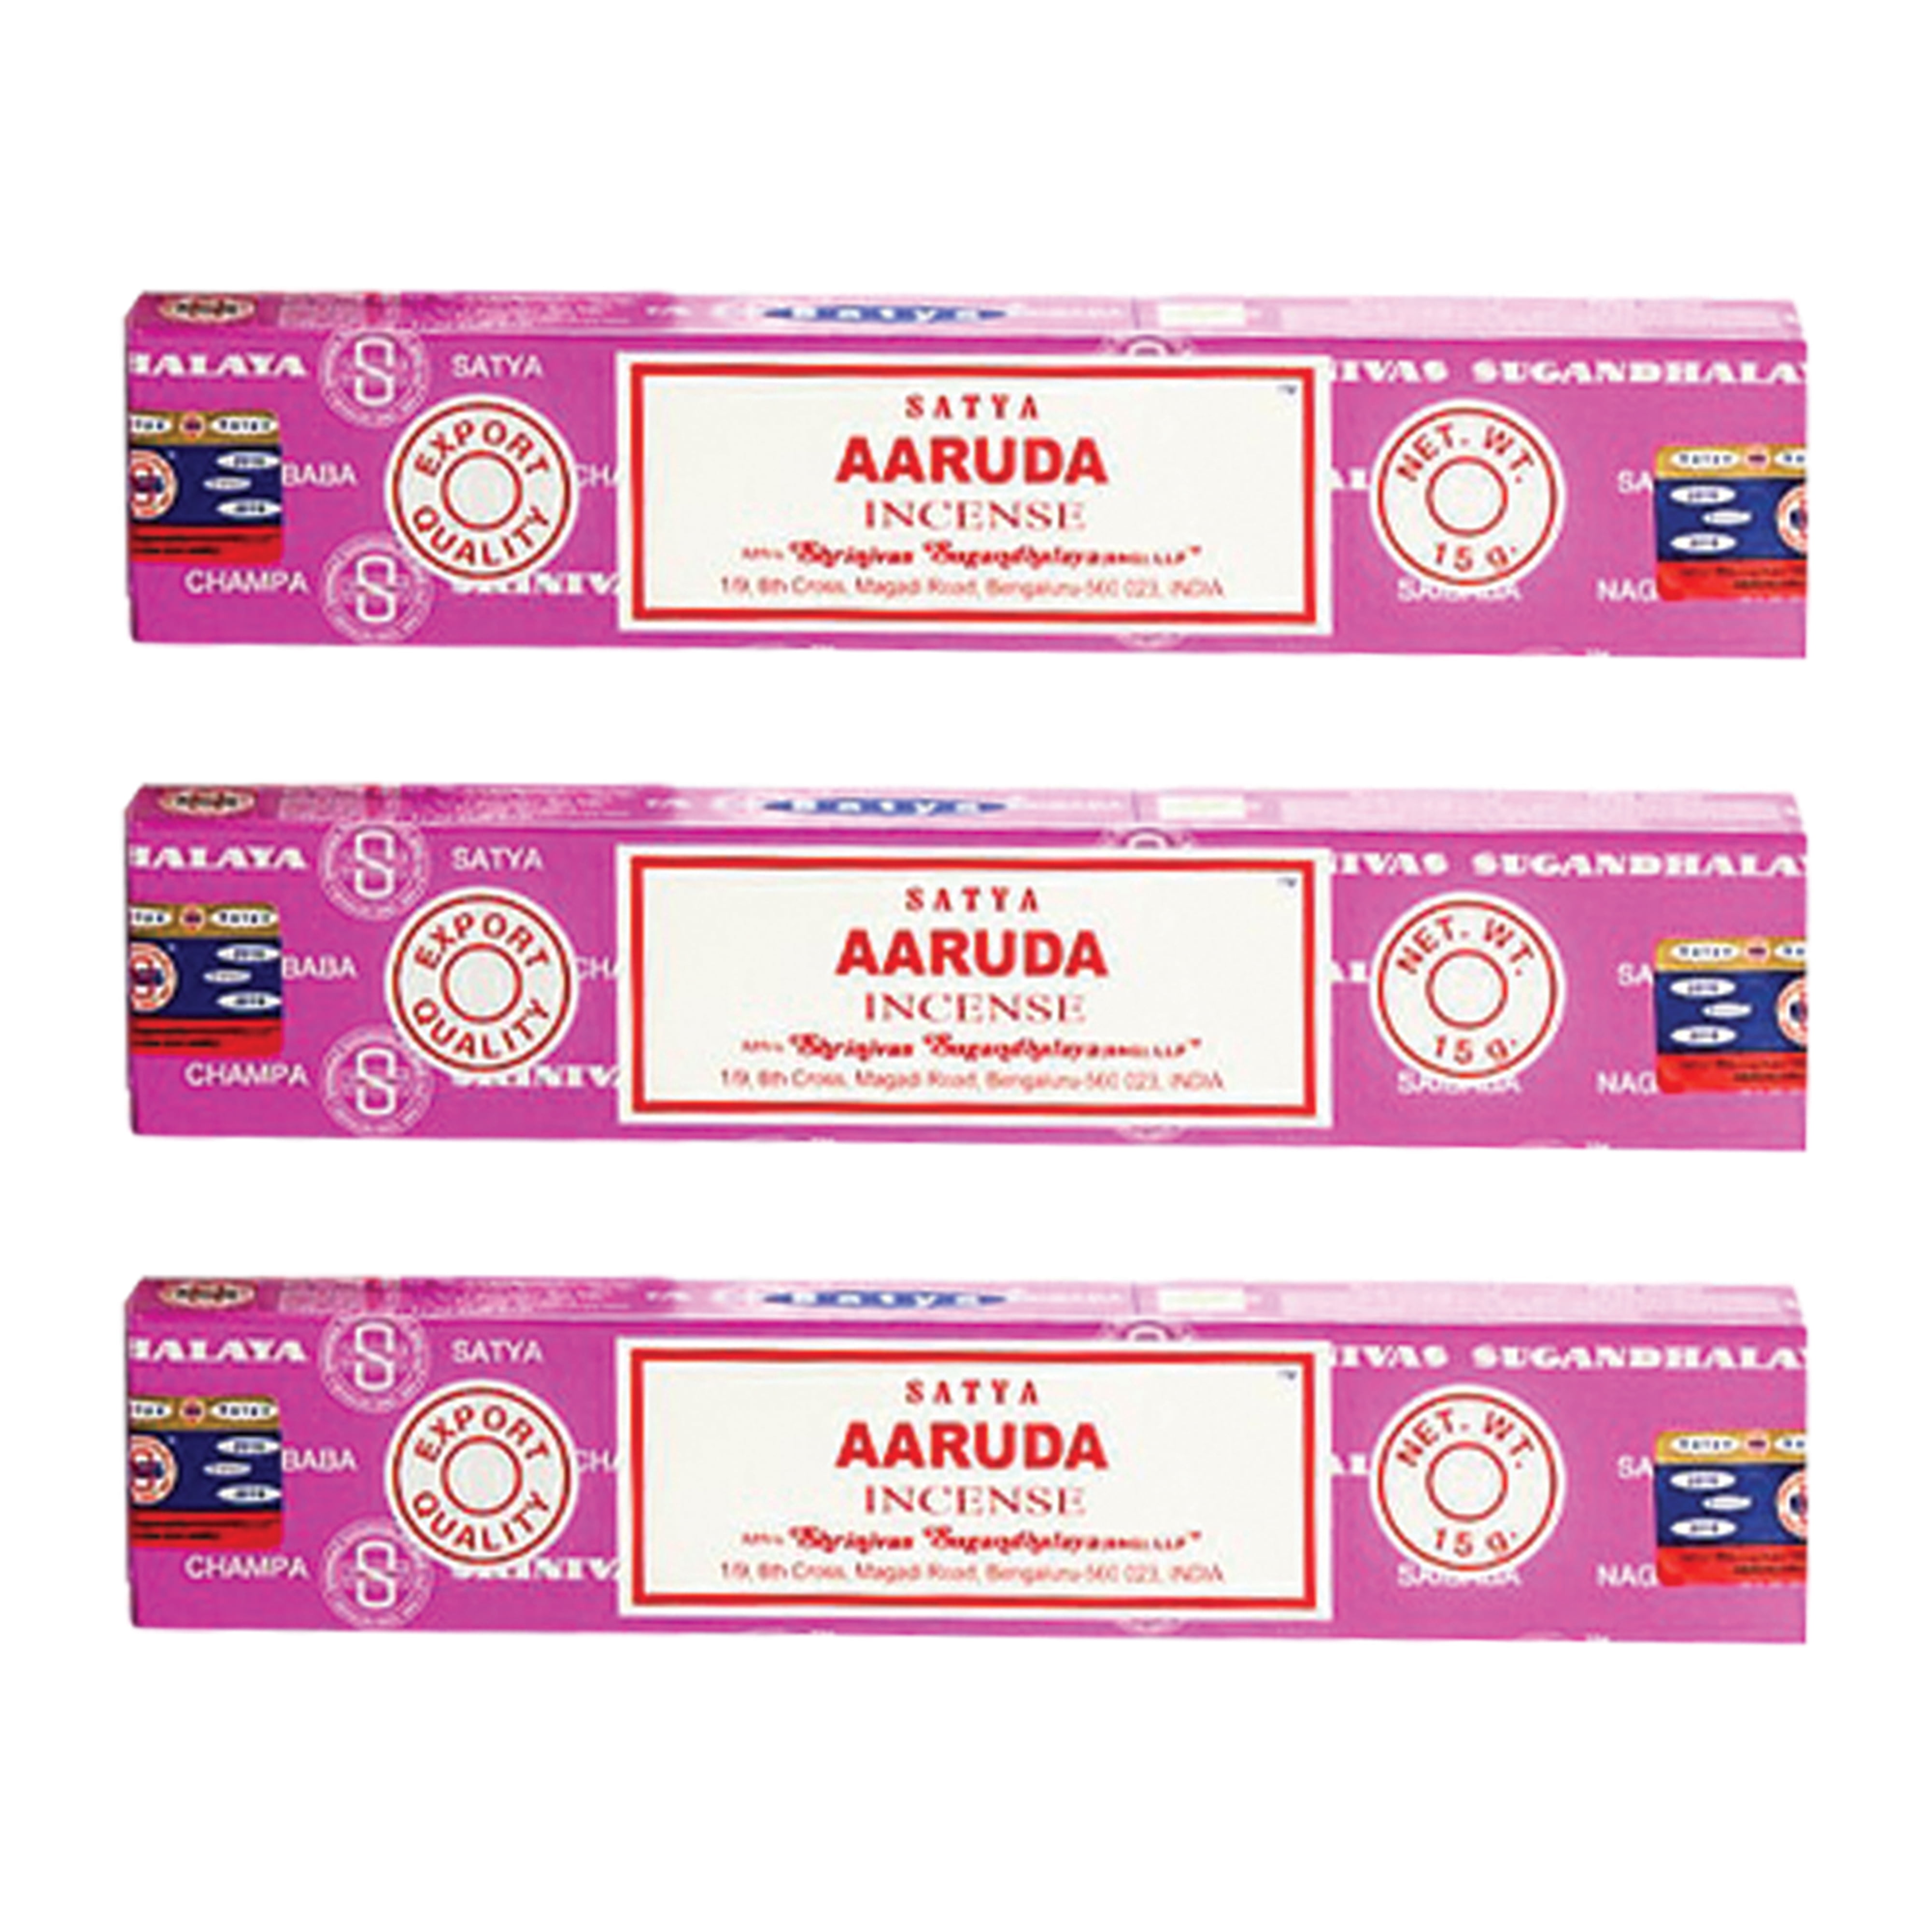 8 & 12 Details about   Goloka Premium Incense Sticks Variety Nag Champa Set of 4 